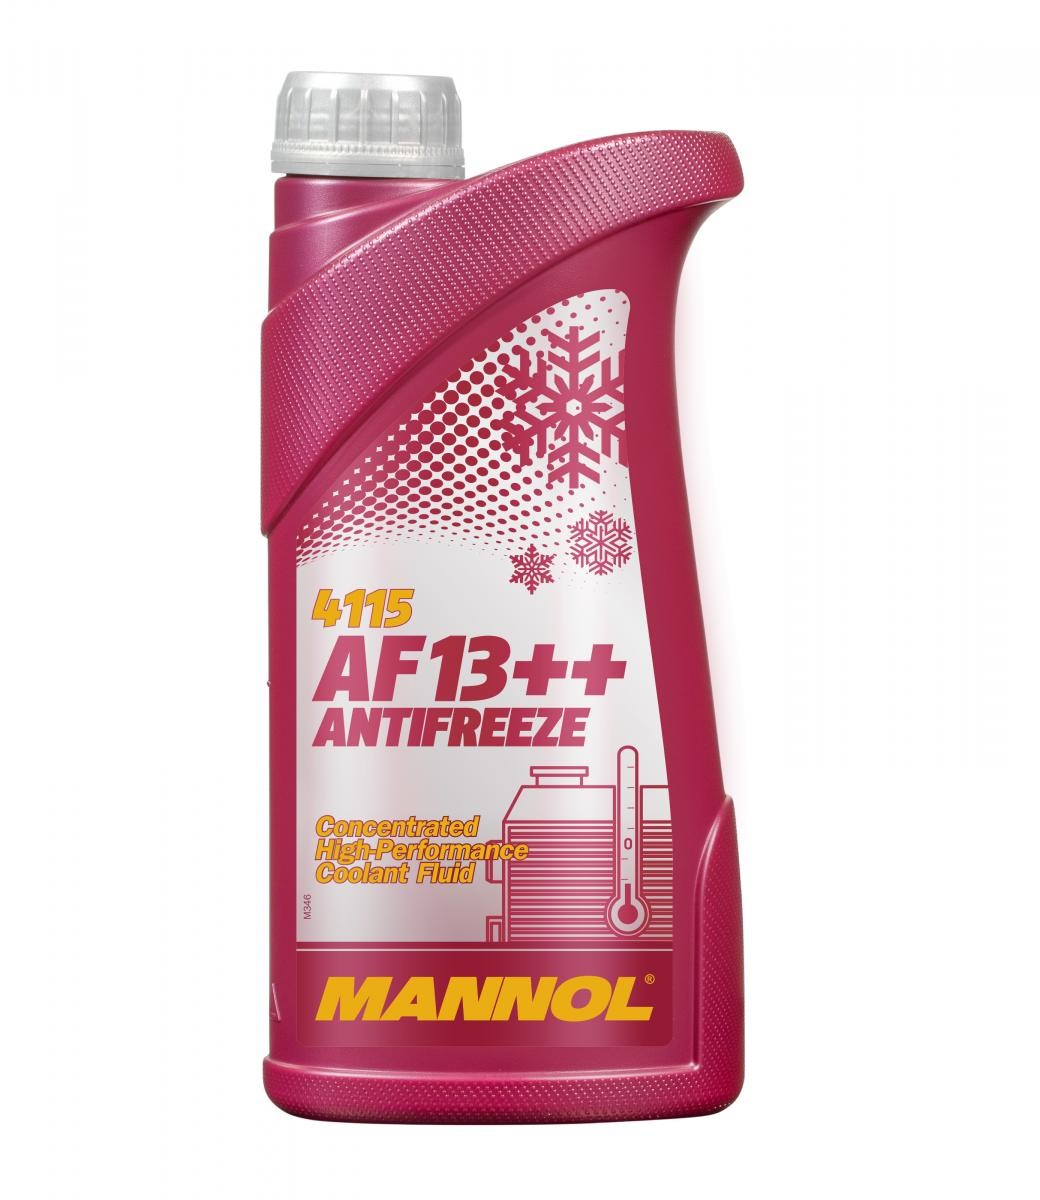 HERCULES K Kühlmittel G12 Rot, 1l, -38(50/50) MANNOL AF13++, High-performance MN4115-1